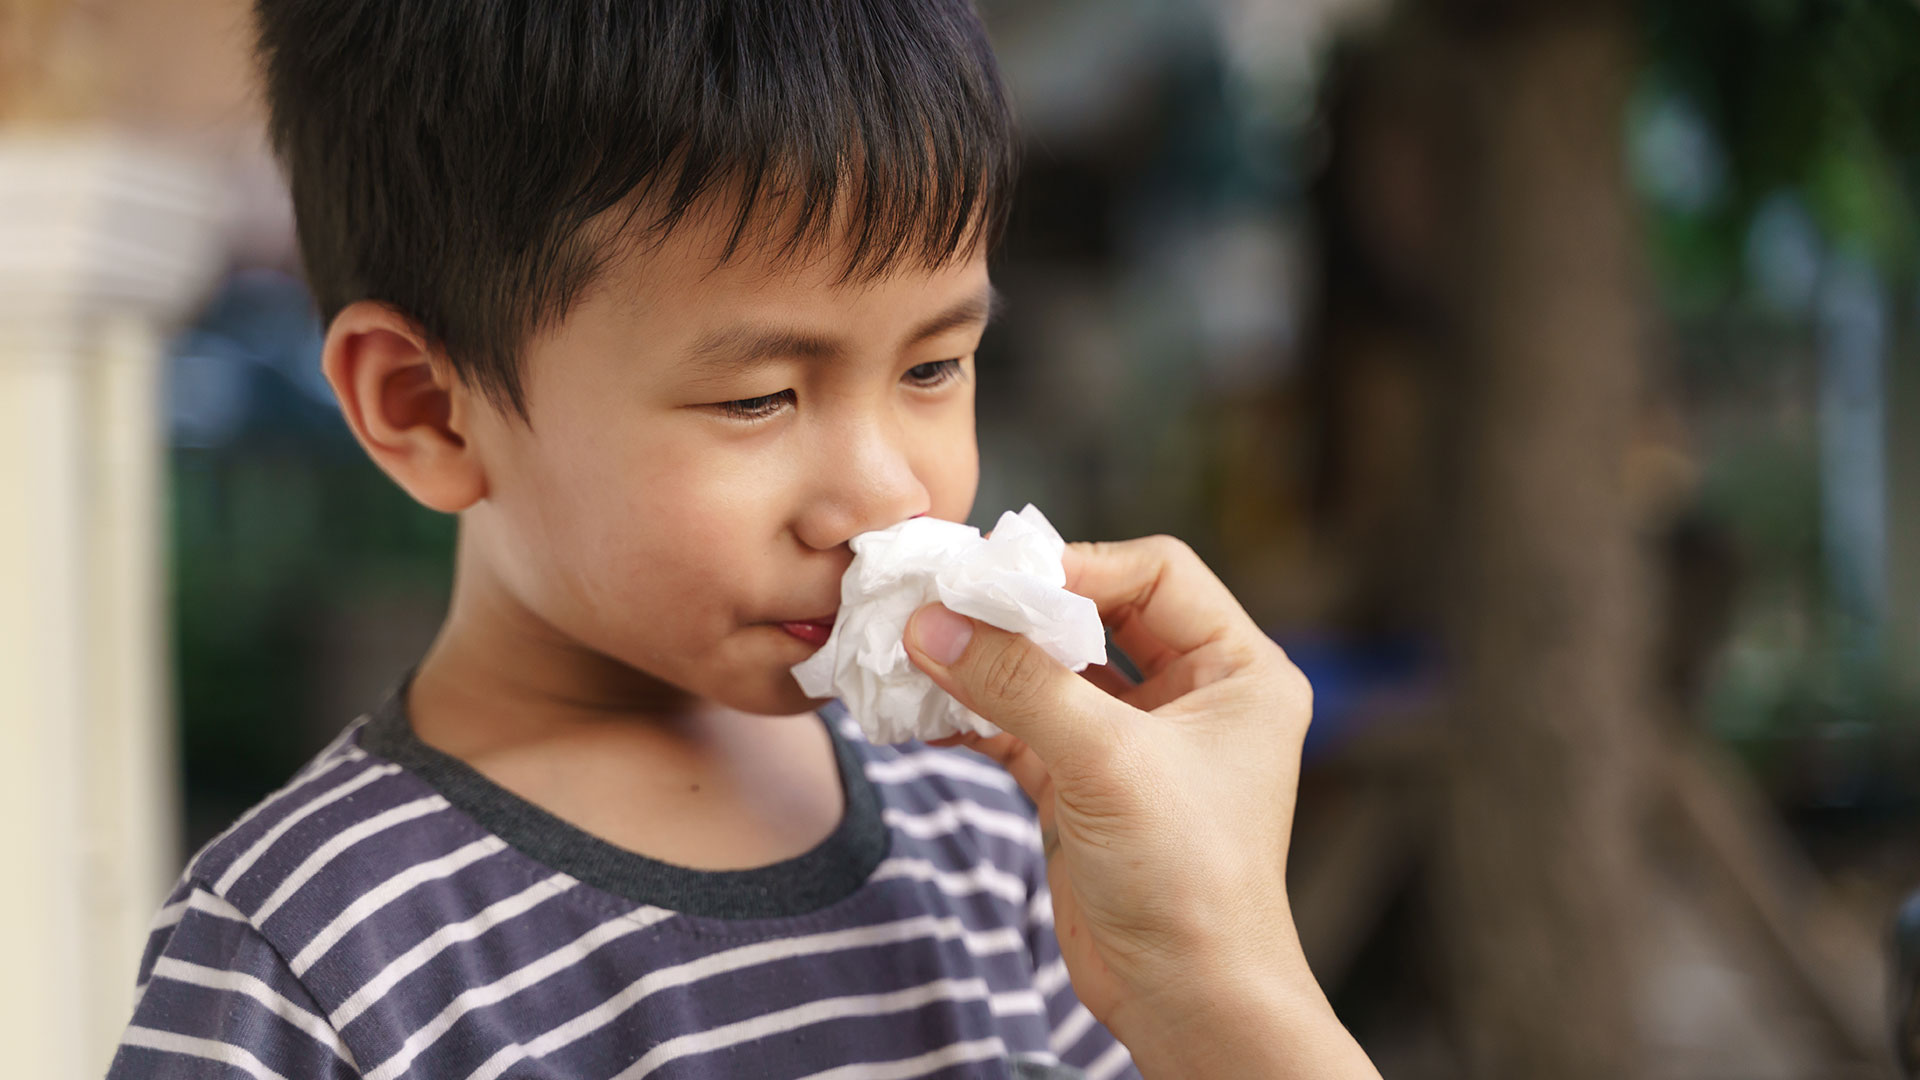 What Causes Children’s Nosebleeds